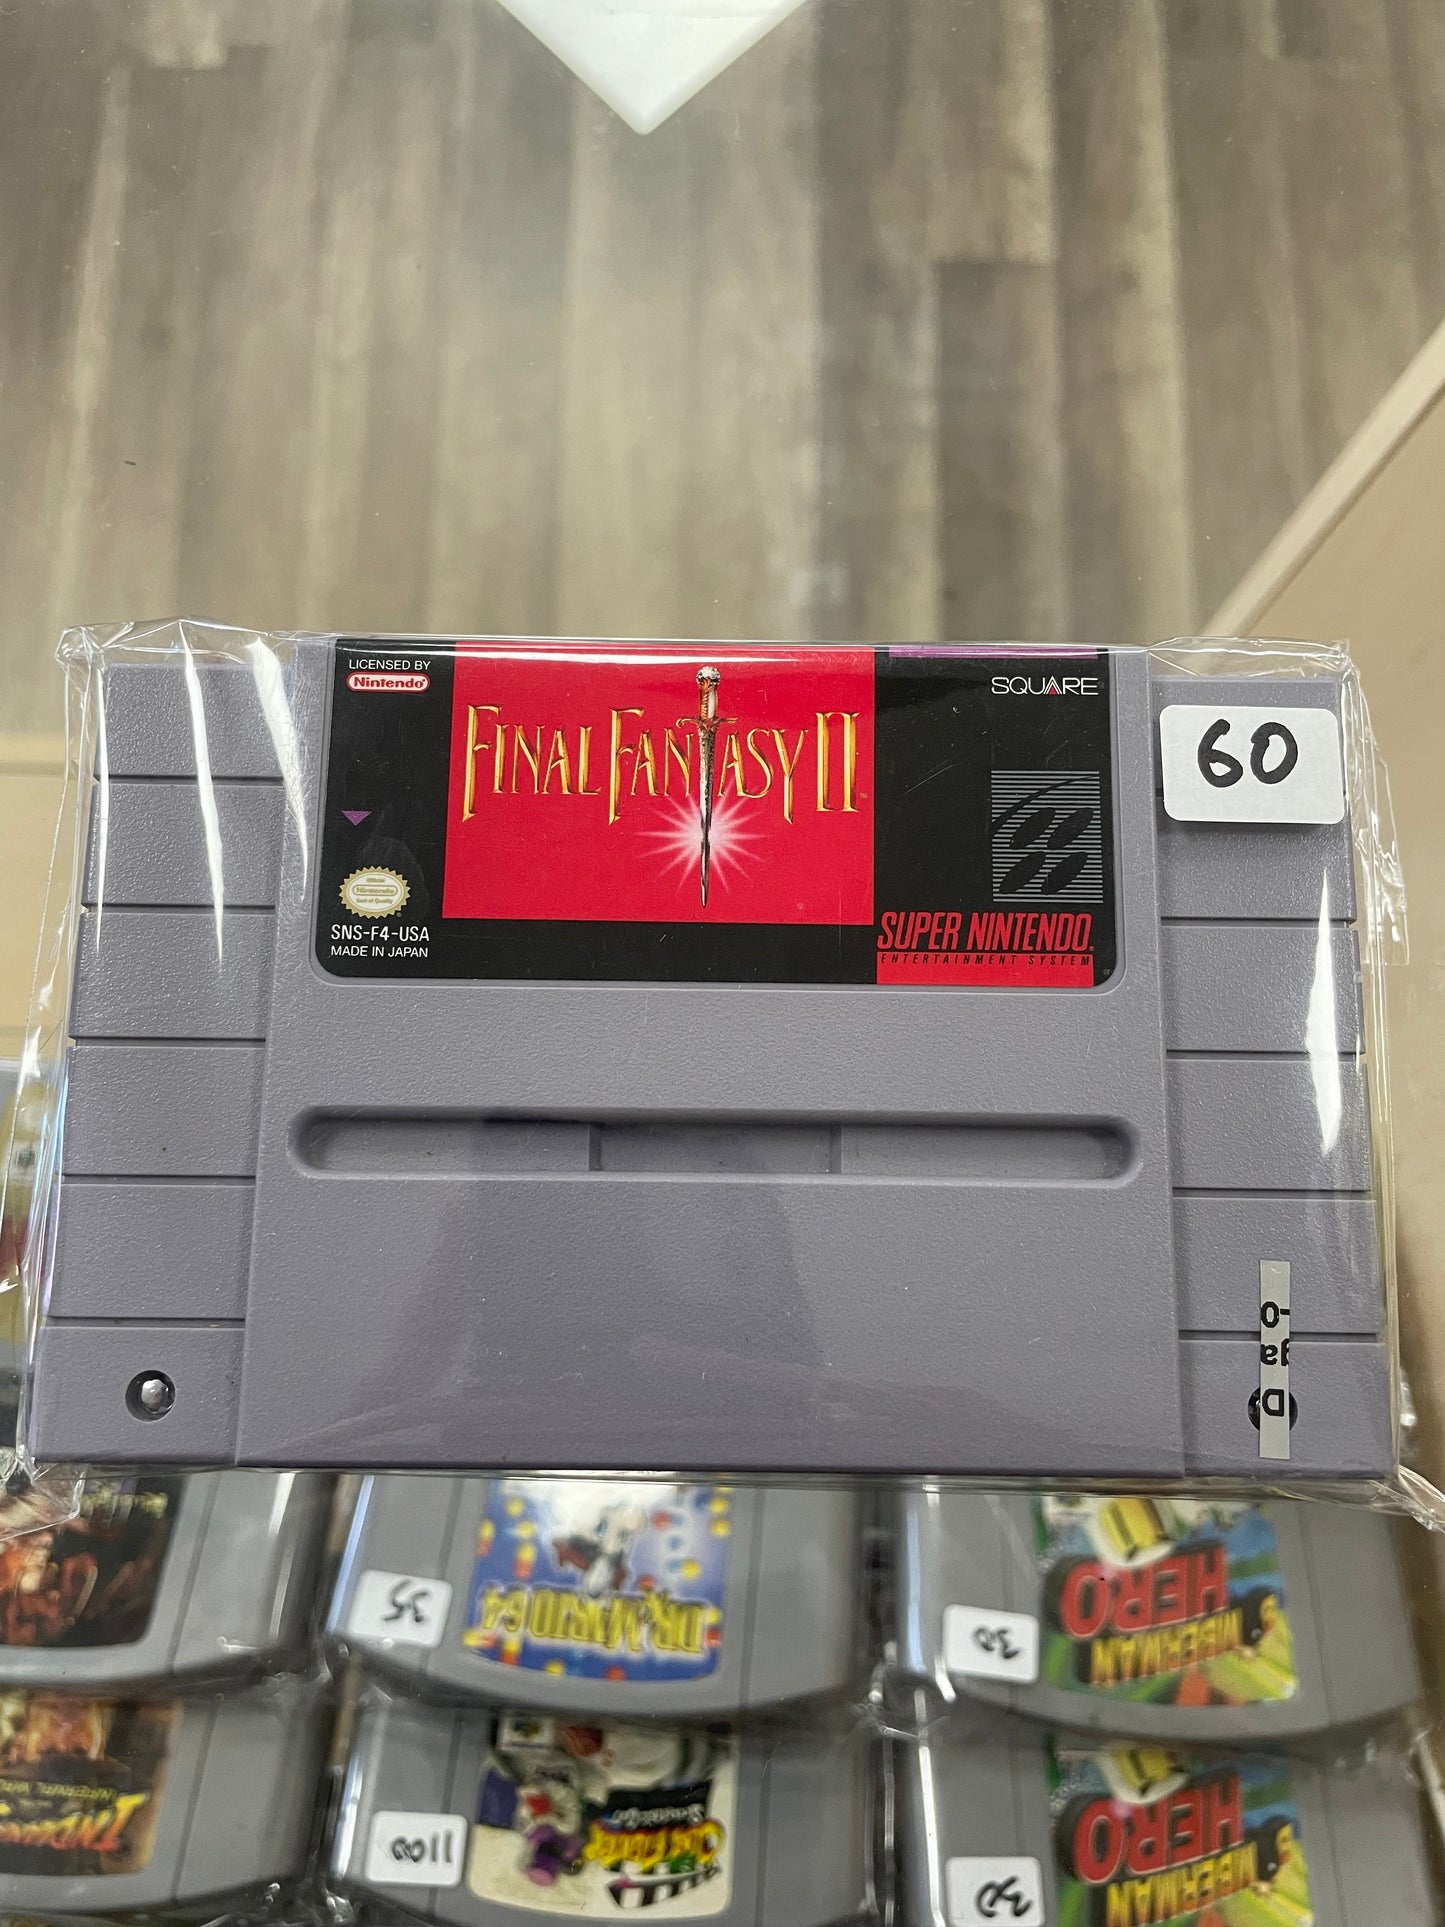 Final Fantasy II Super Nintendo